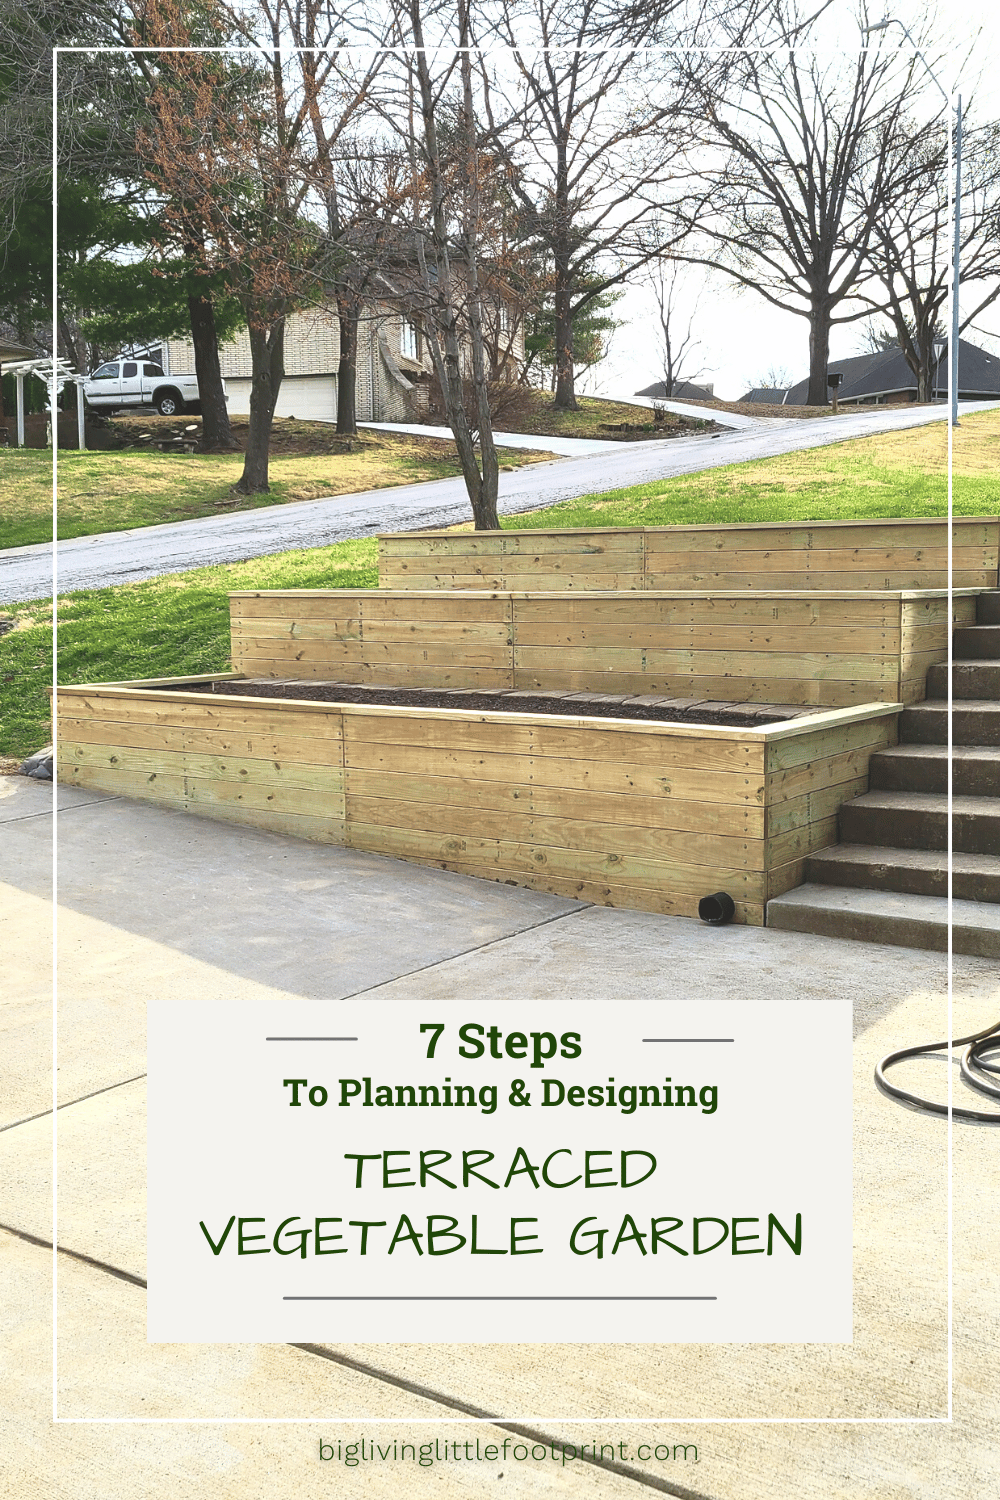 7 Steps to Planning & Designing A Terraced Vegetable Garden